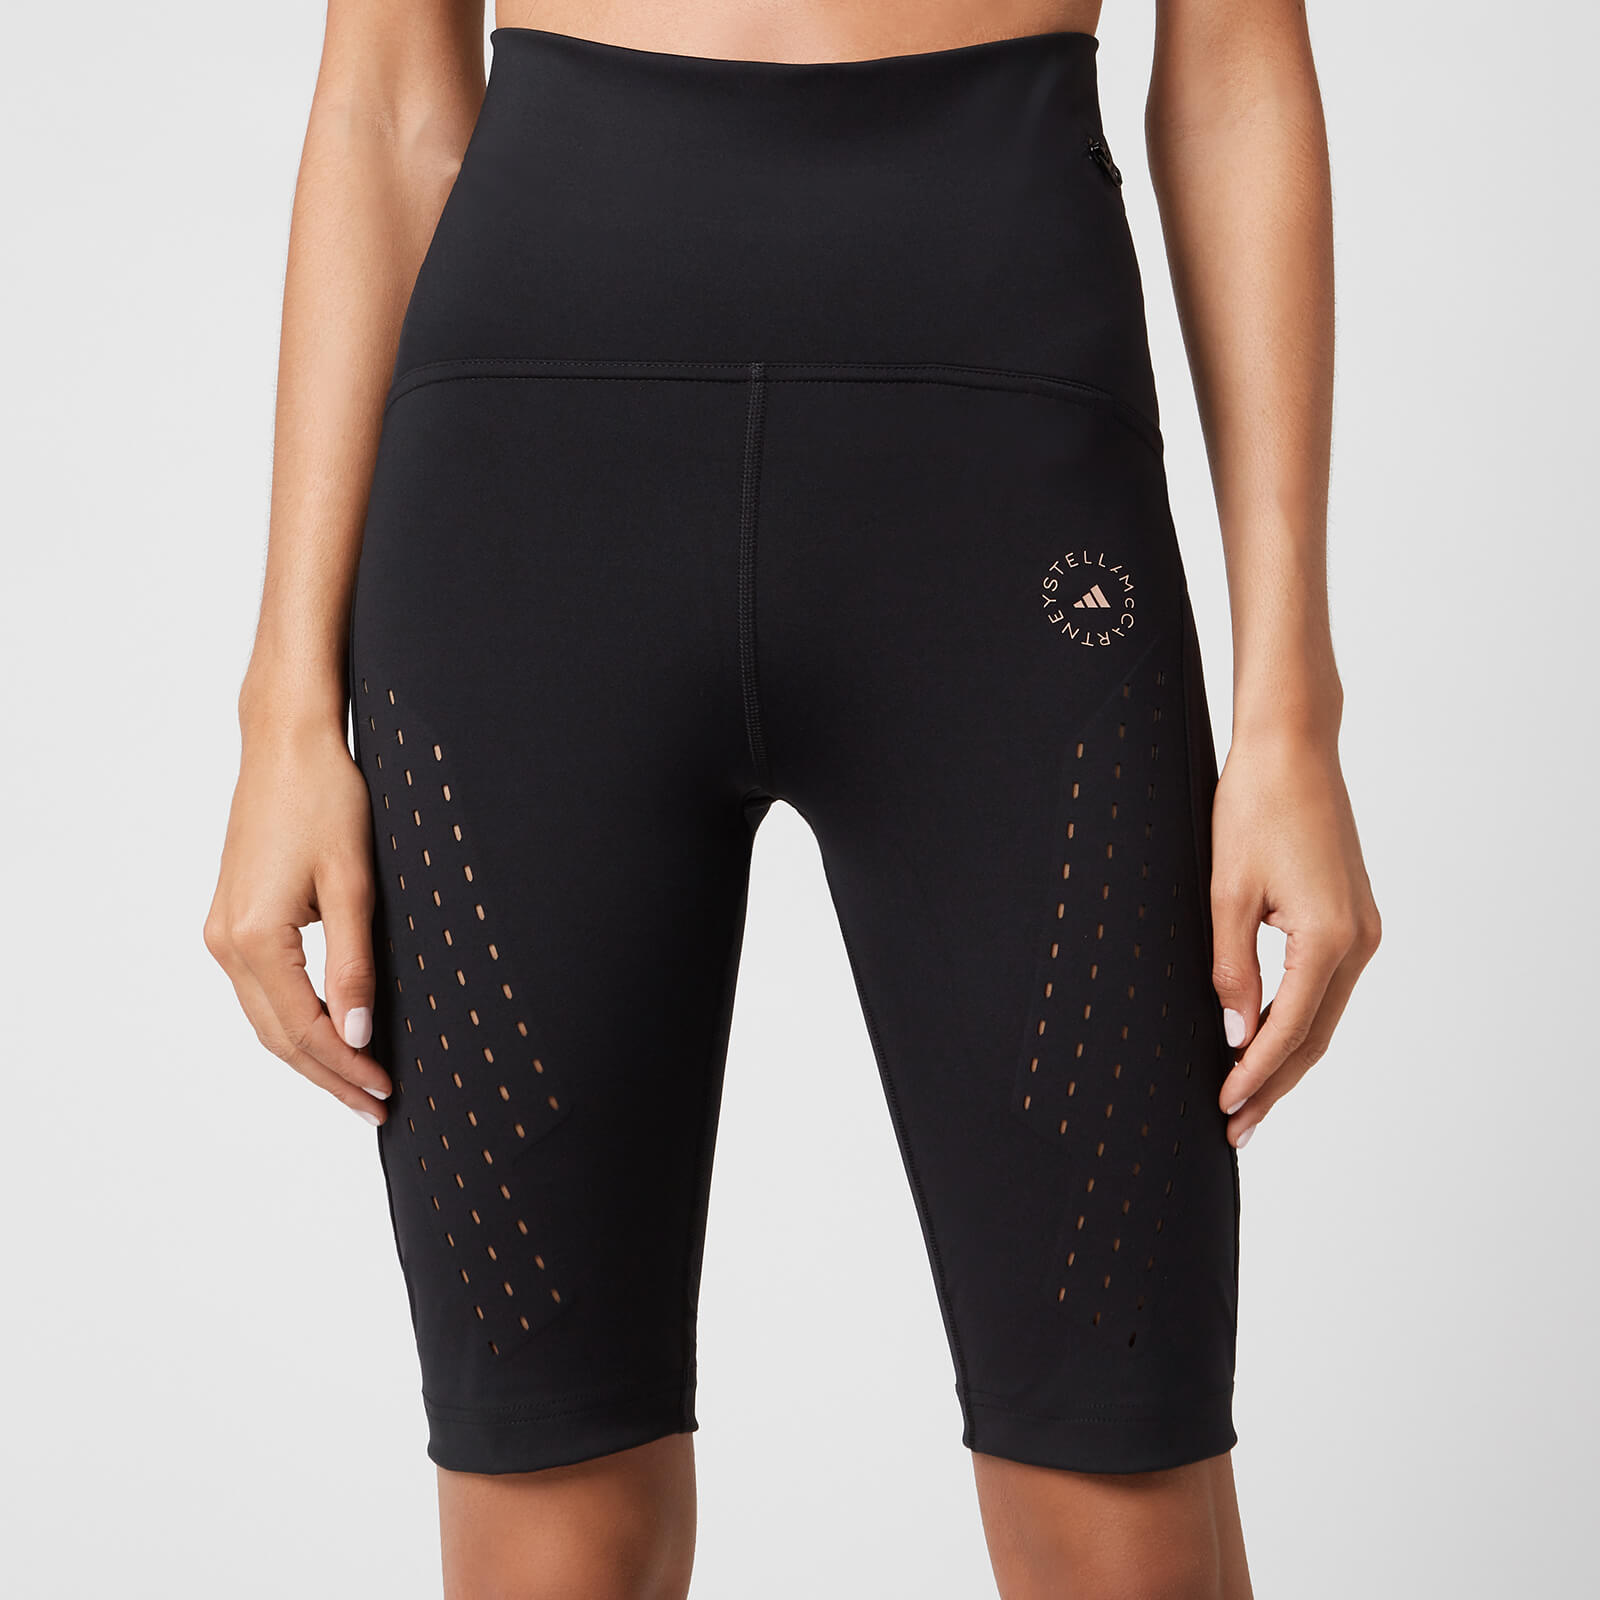 adidas by Stella McCartney Women's Truepure Cycle Shorts - Black - M